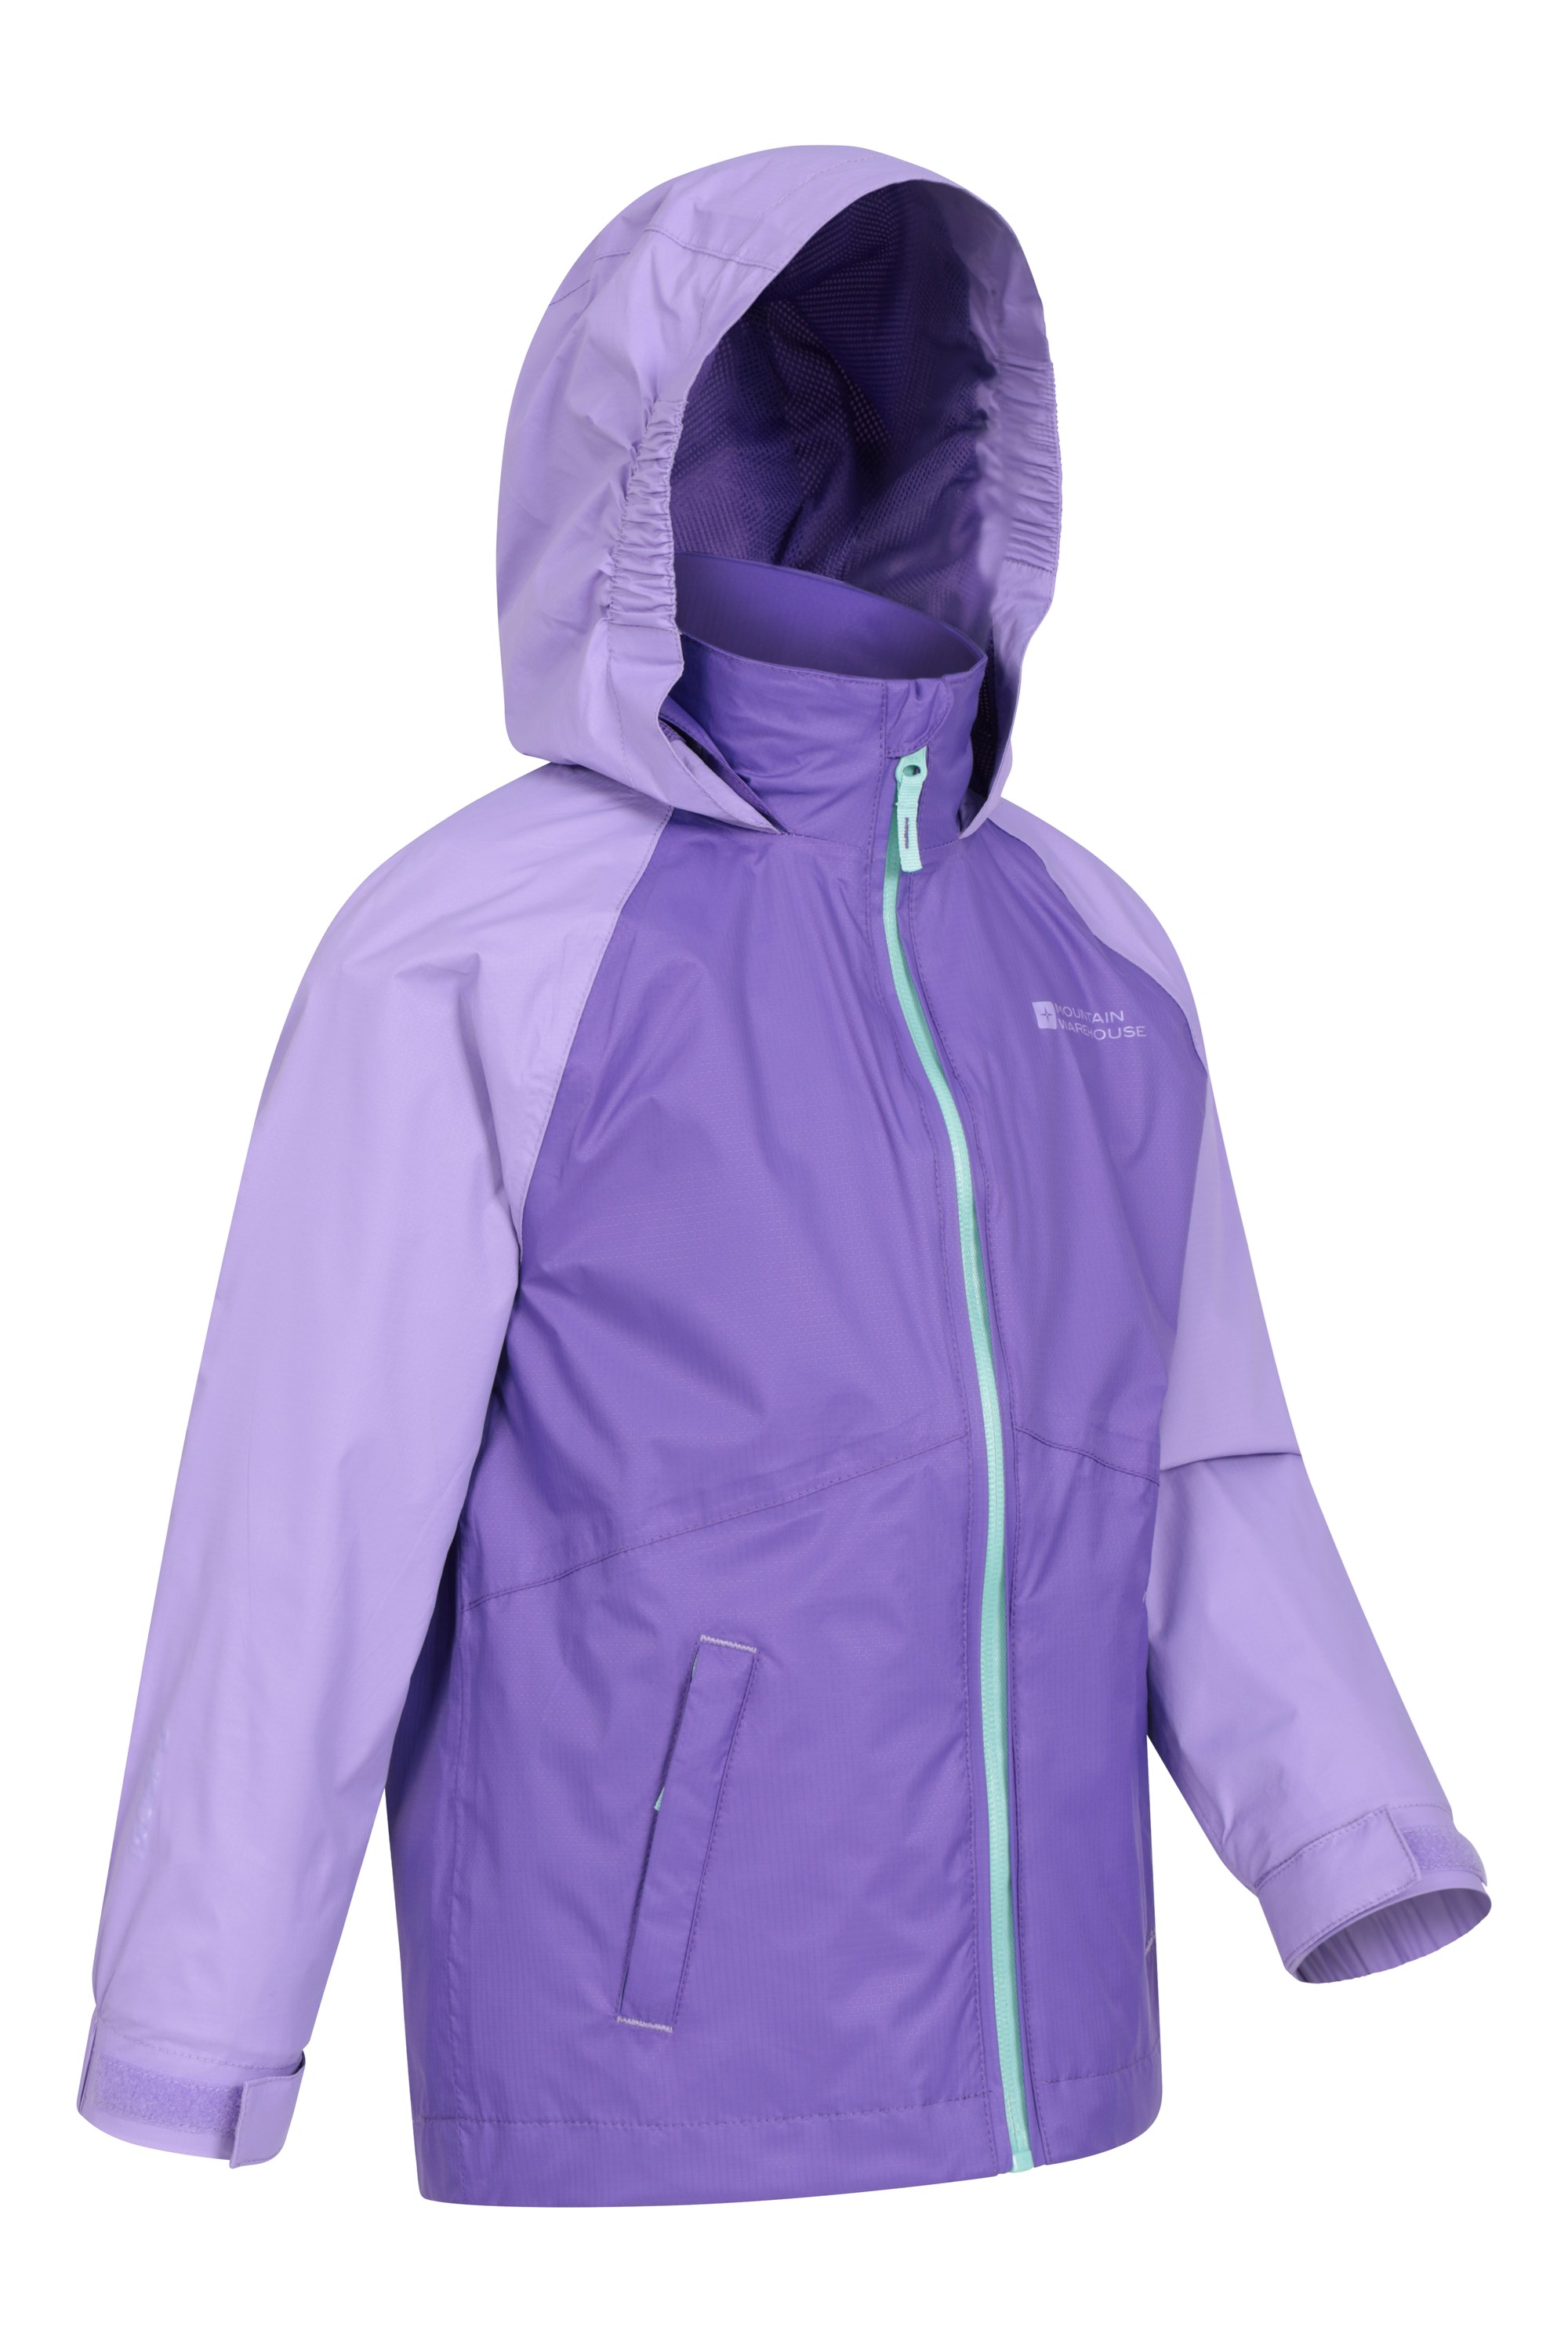 Meeyou Boys & Girls Raincoat Waterproof Rain Jacket with Hood for Outdoor 